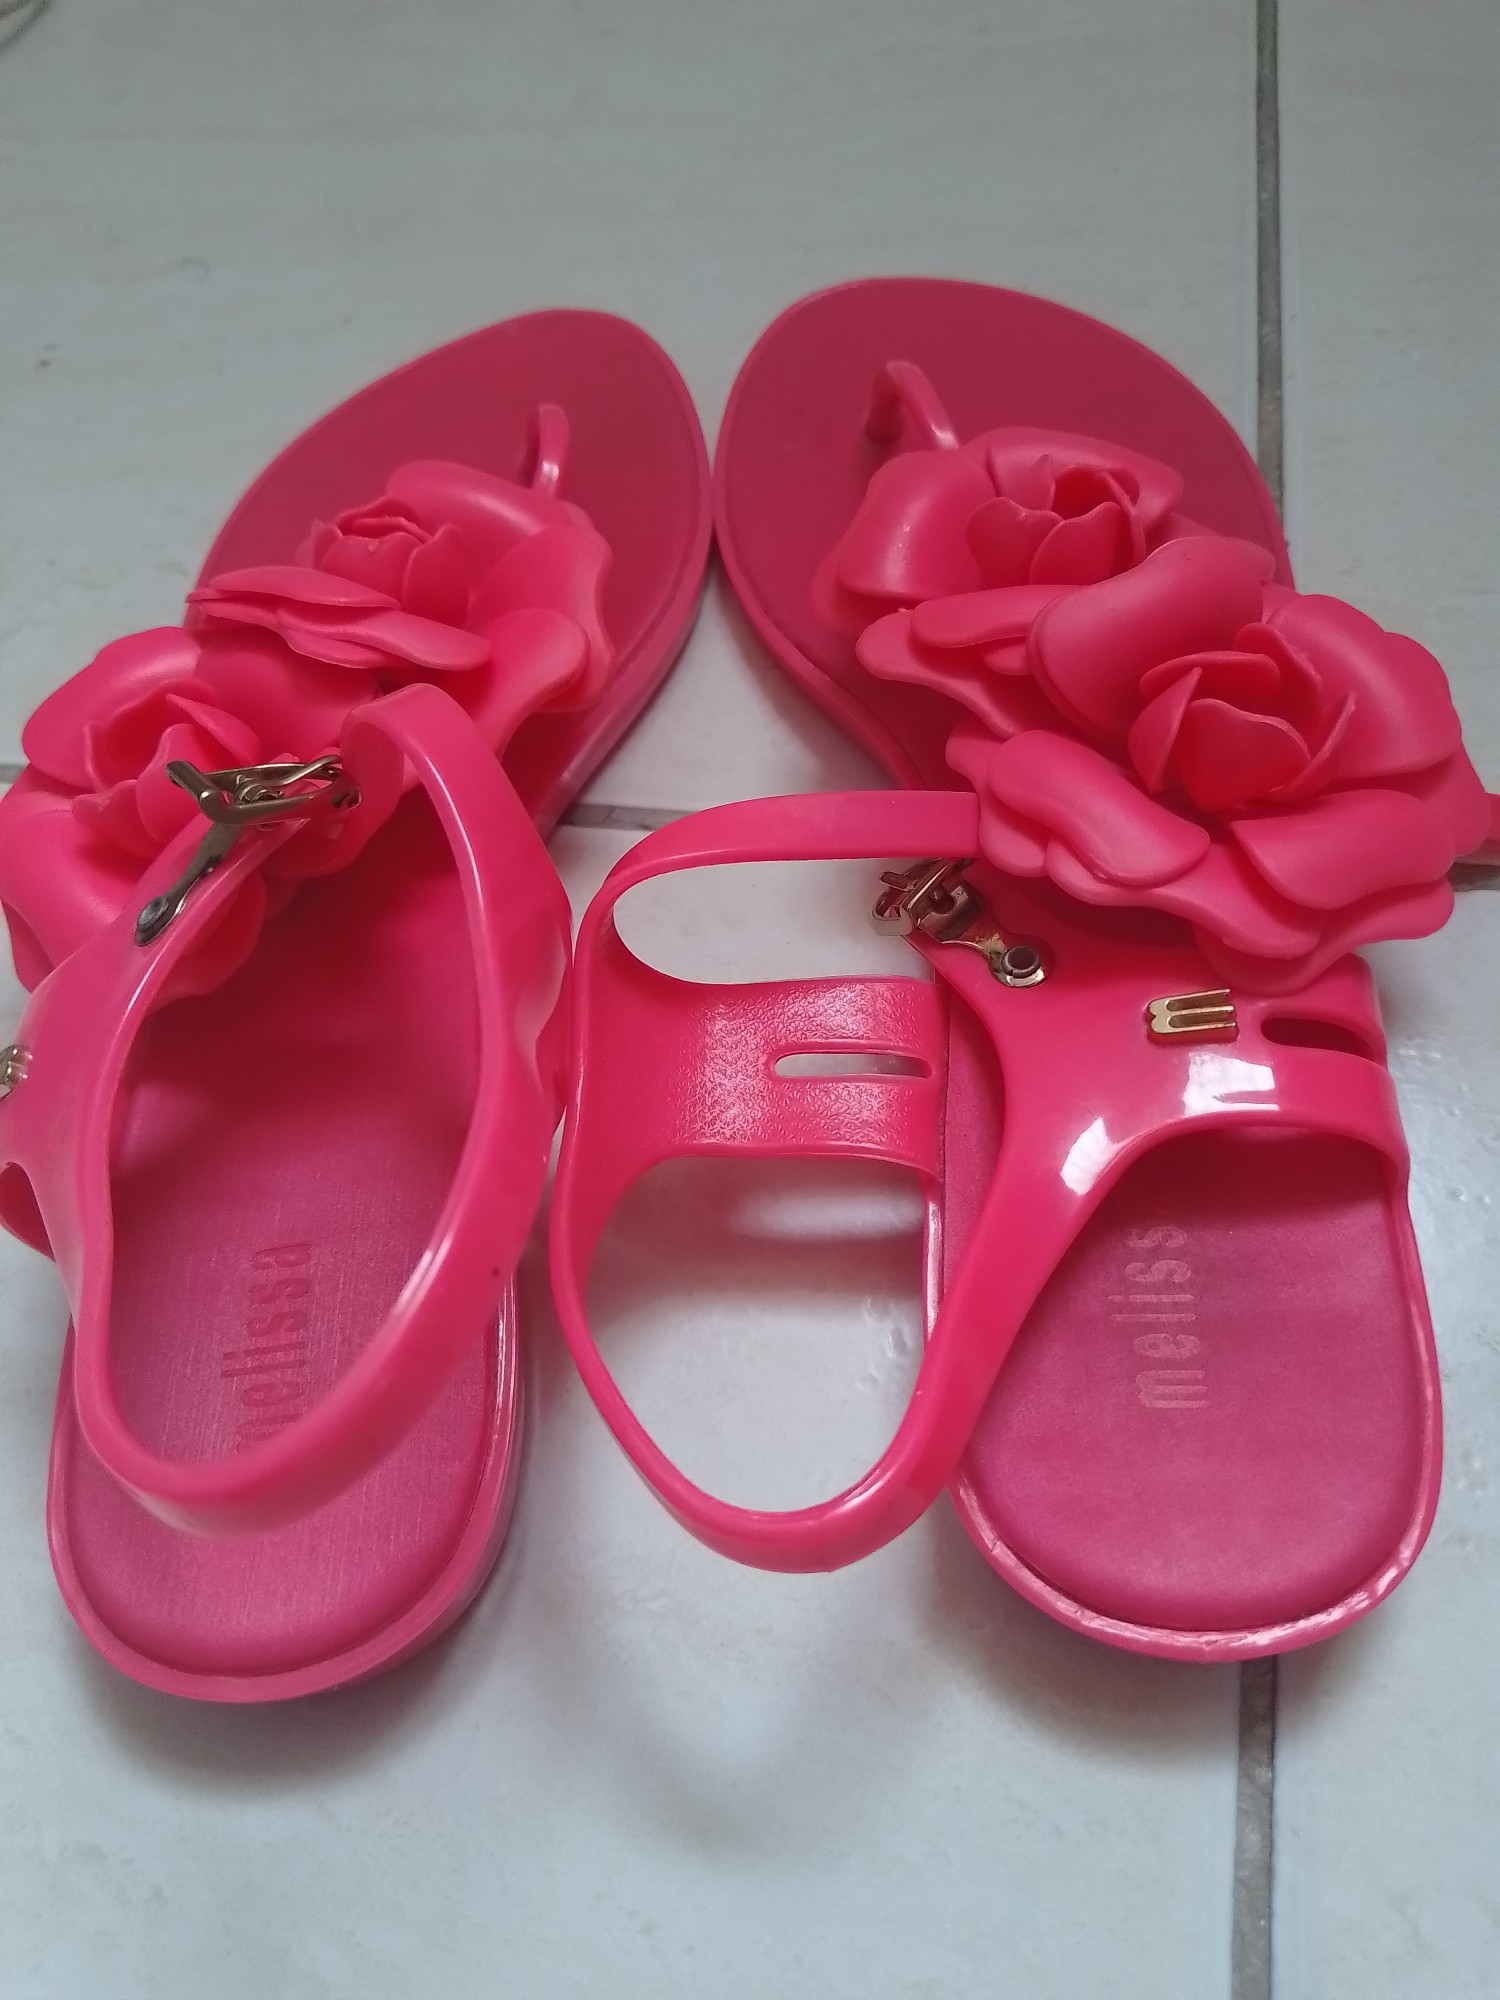 zapatos para mujer - Zapatillas con flores MELISSA size 8 sapatillas color rosa no son marca falsa